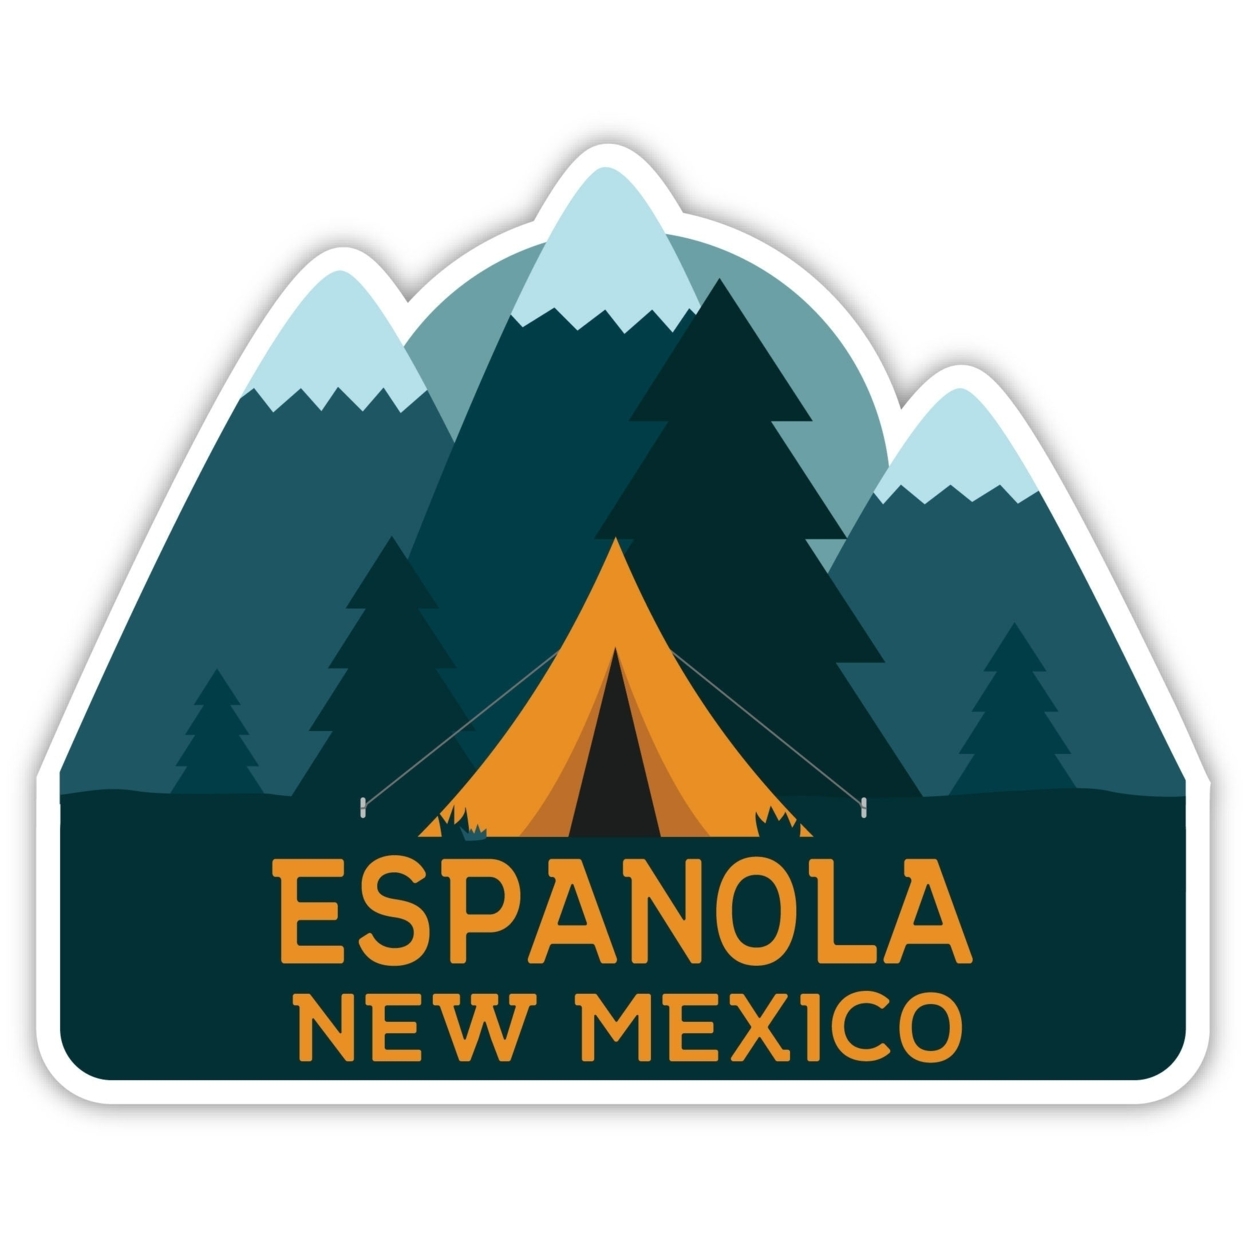 Espanola New Mexico Souvenir Decorative Stickers (Choose Theme And Size) - 4-Pack, 12-Inch, Tent